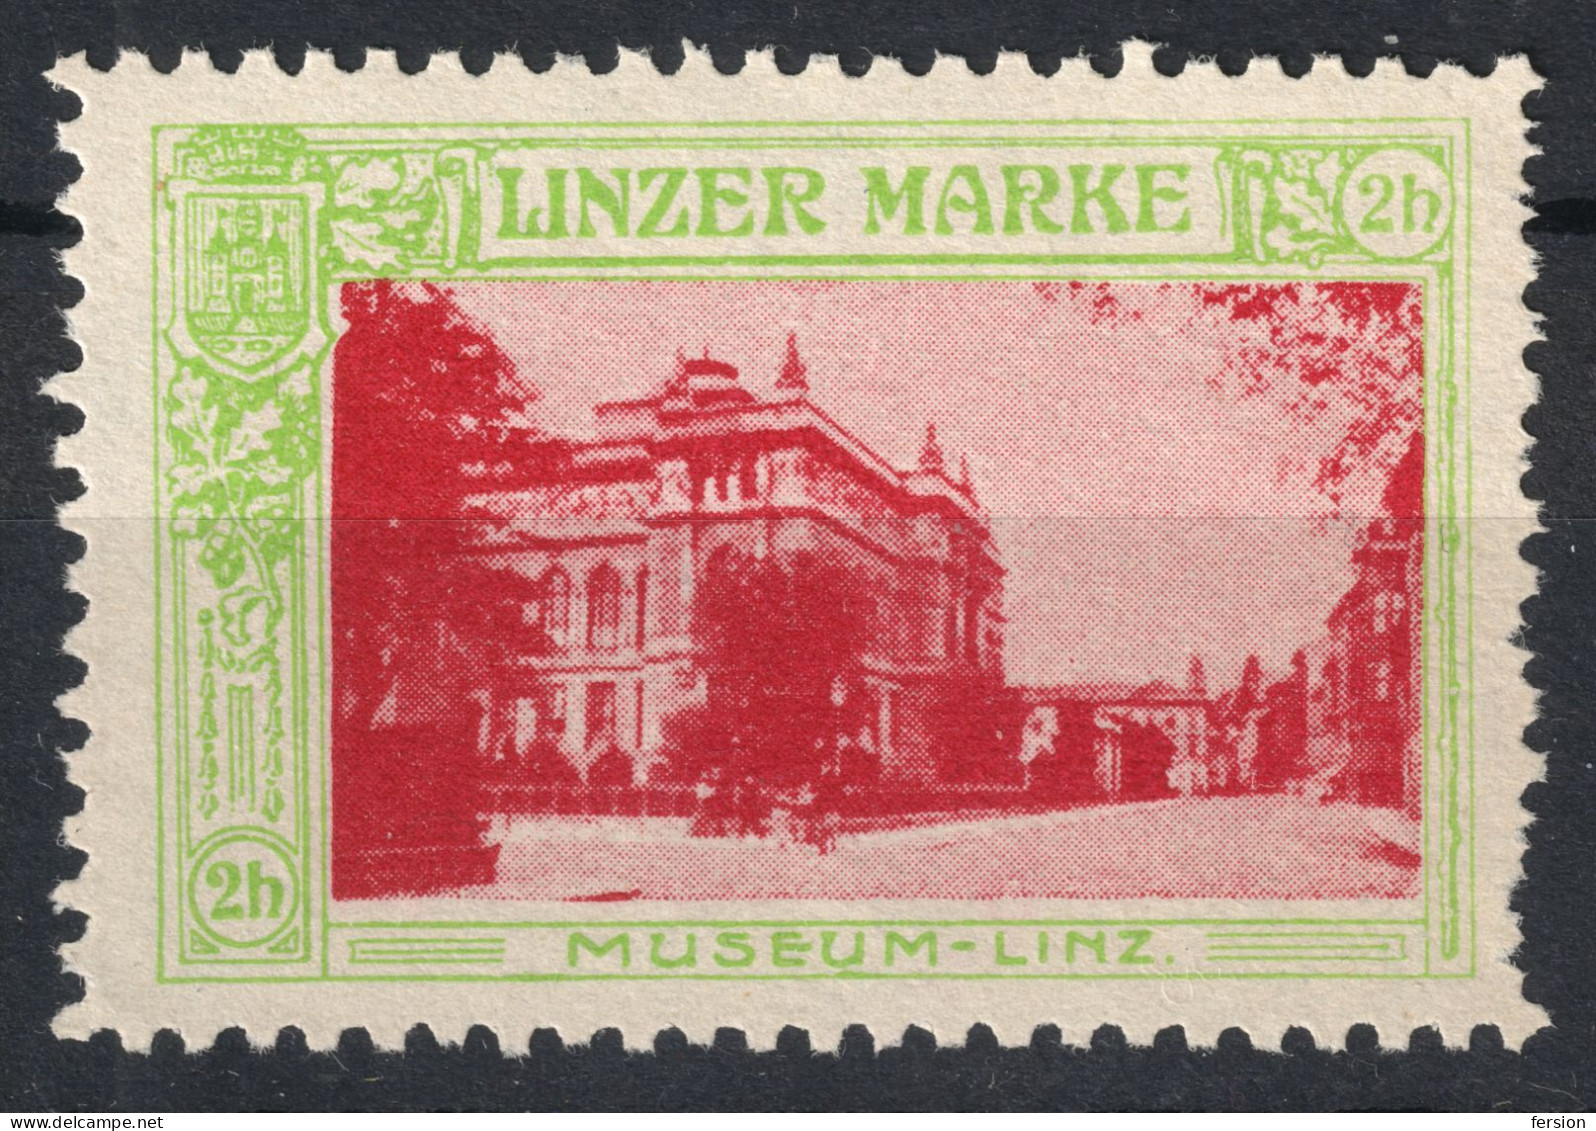 Museums MUSEUM - City LINZ 1910 Austria Charity Label Cinderella Vignette / LINZER MARKE - Museos